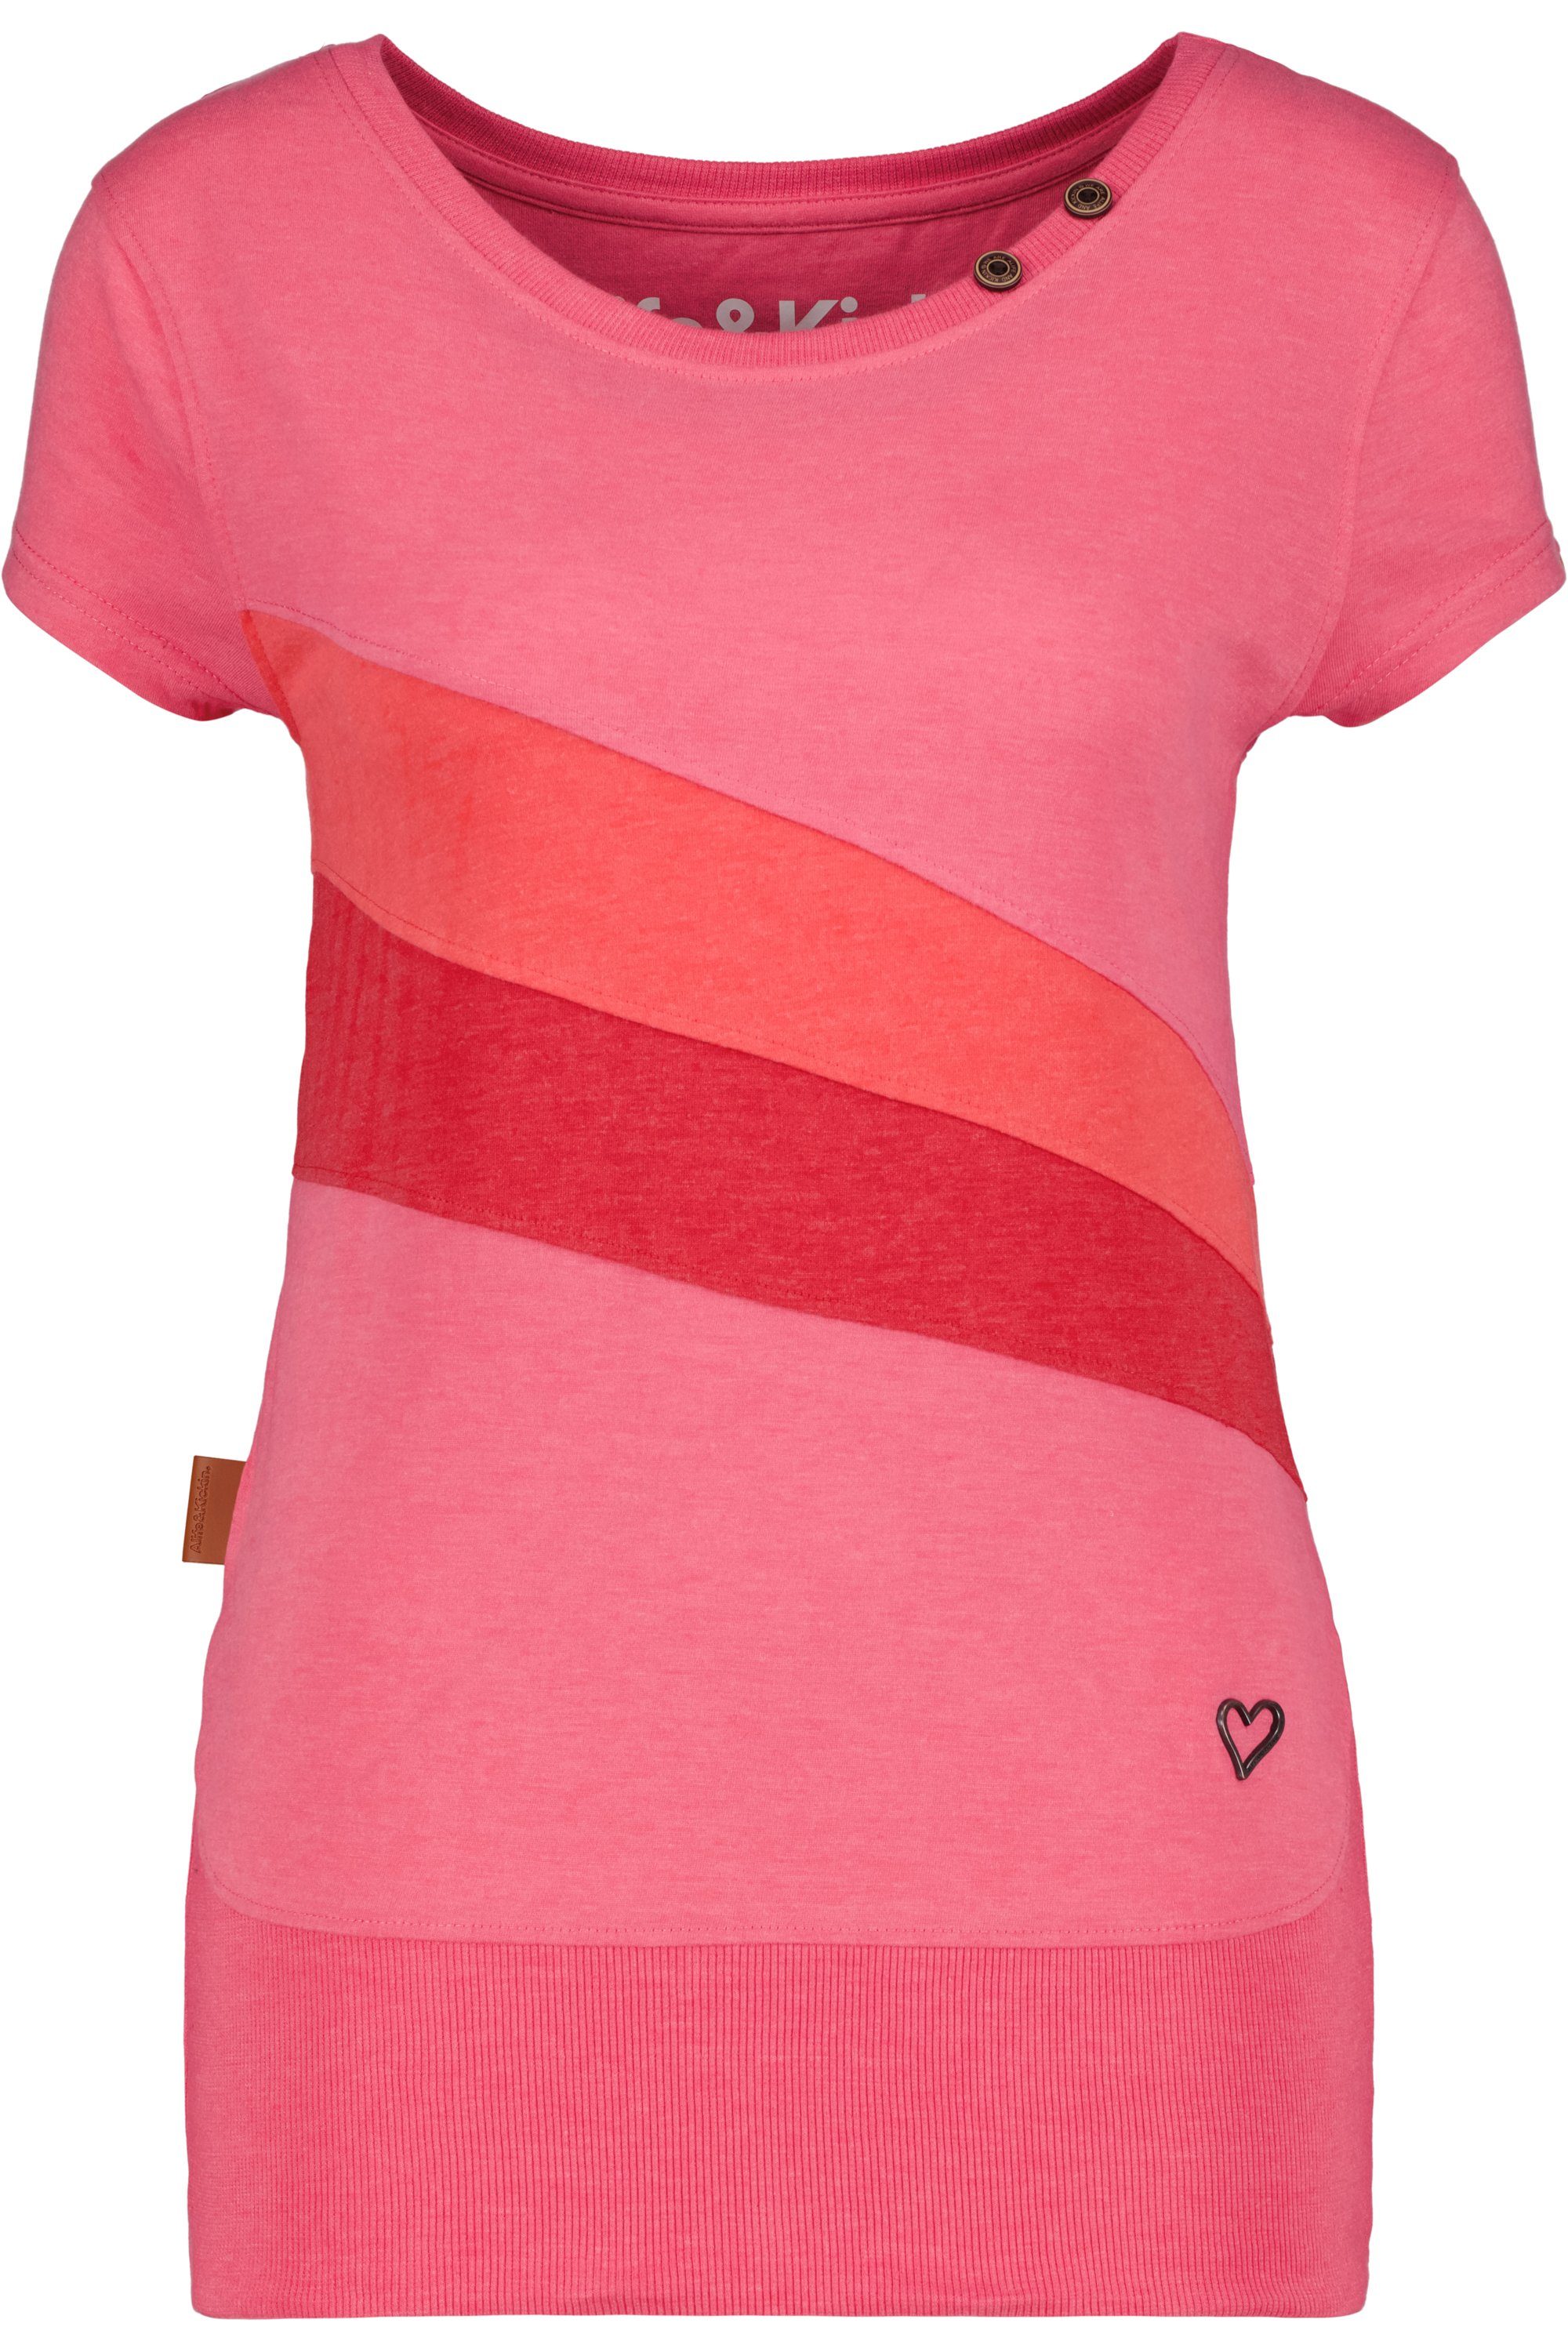 T-Shirt T-Shirt Alife flamingo Kickin Damen & CleaAK Shirt